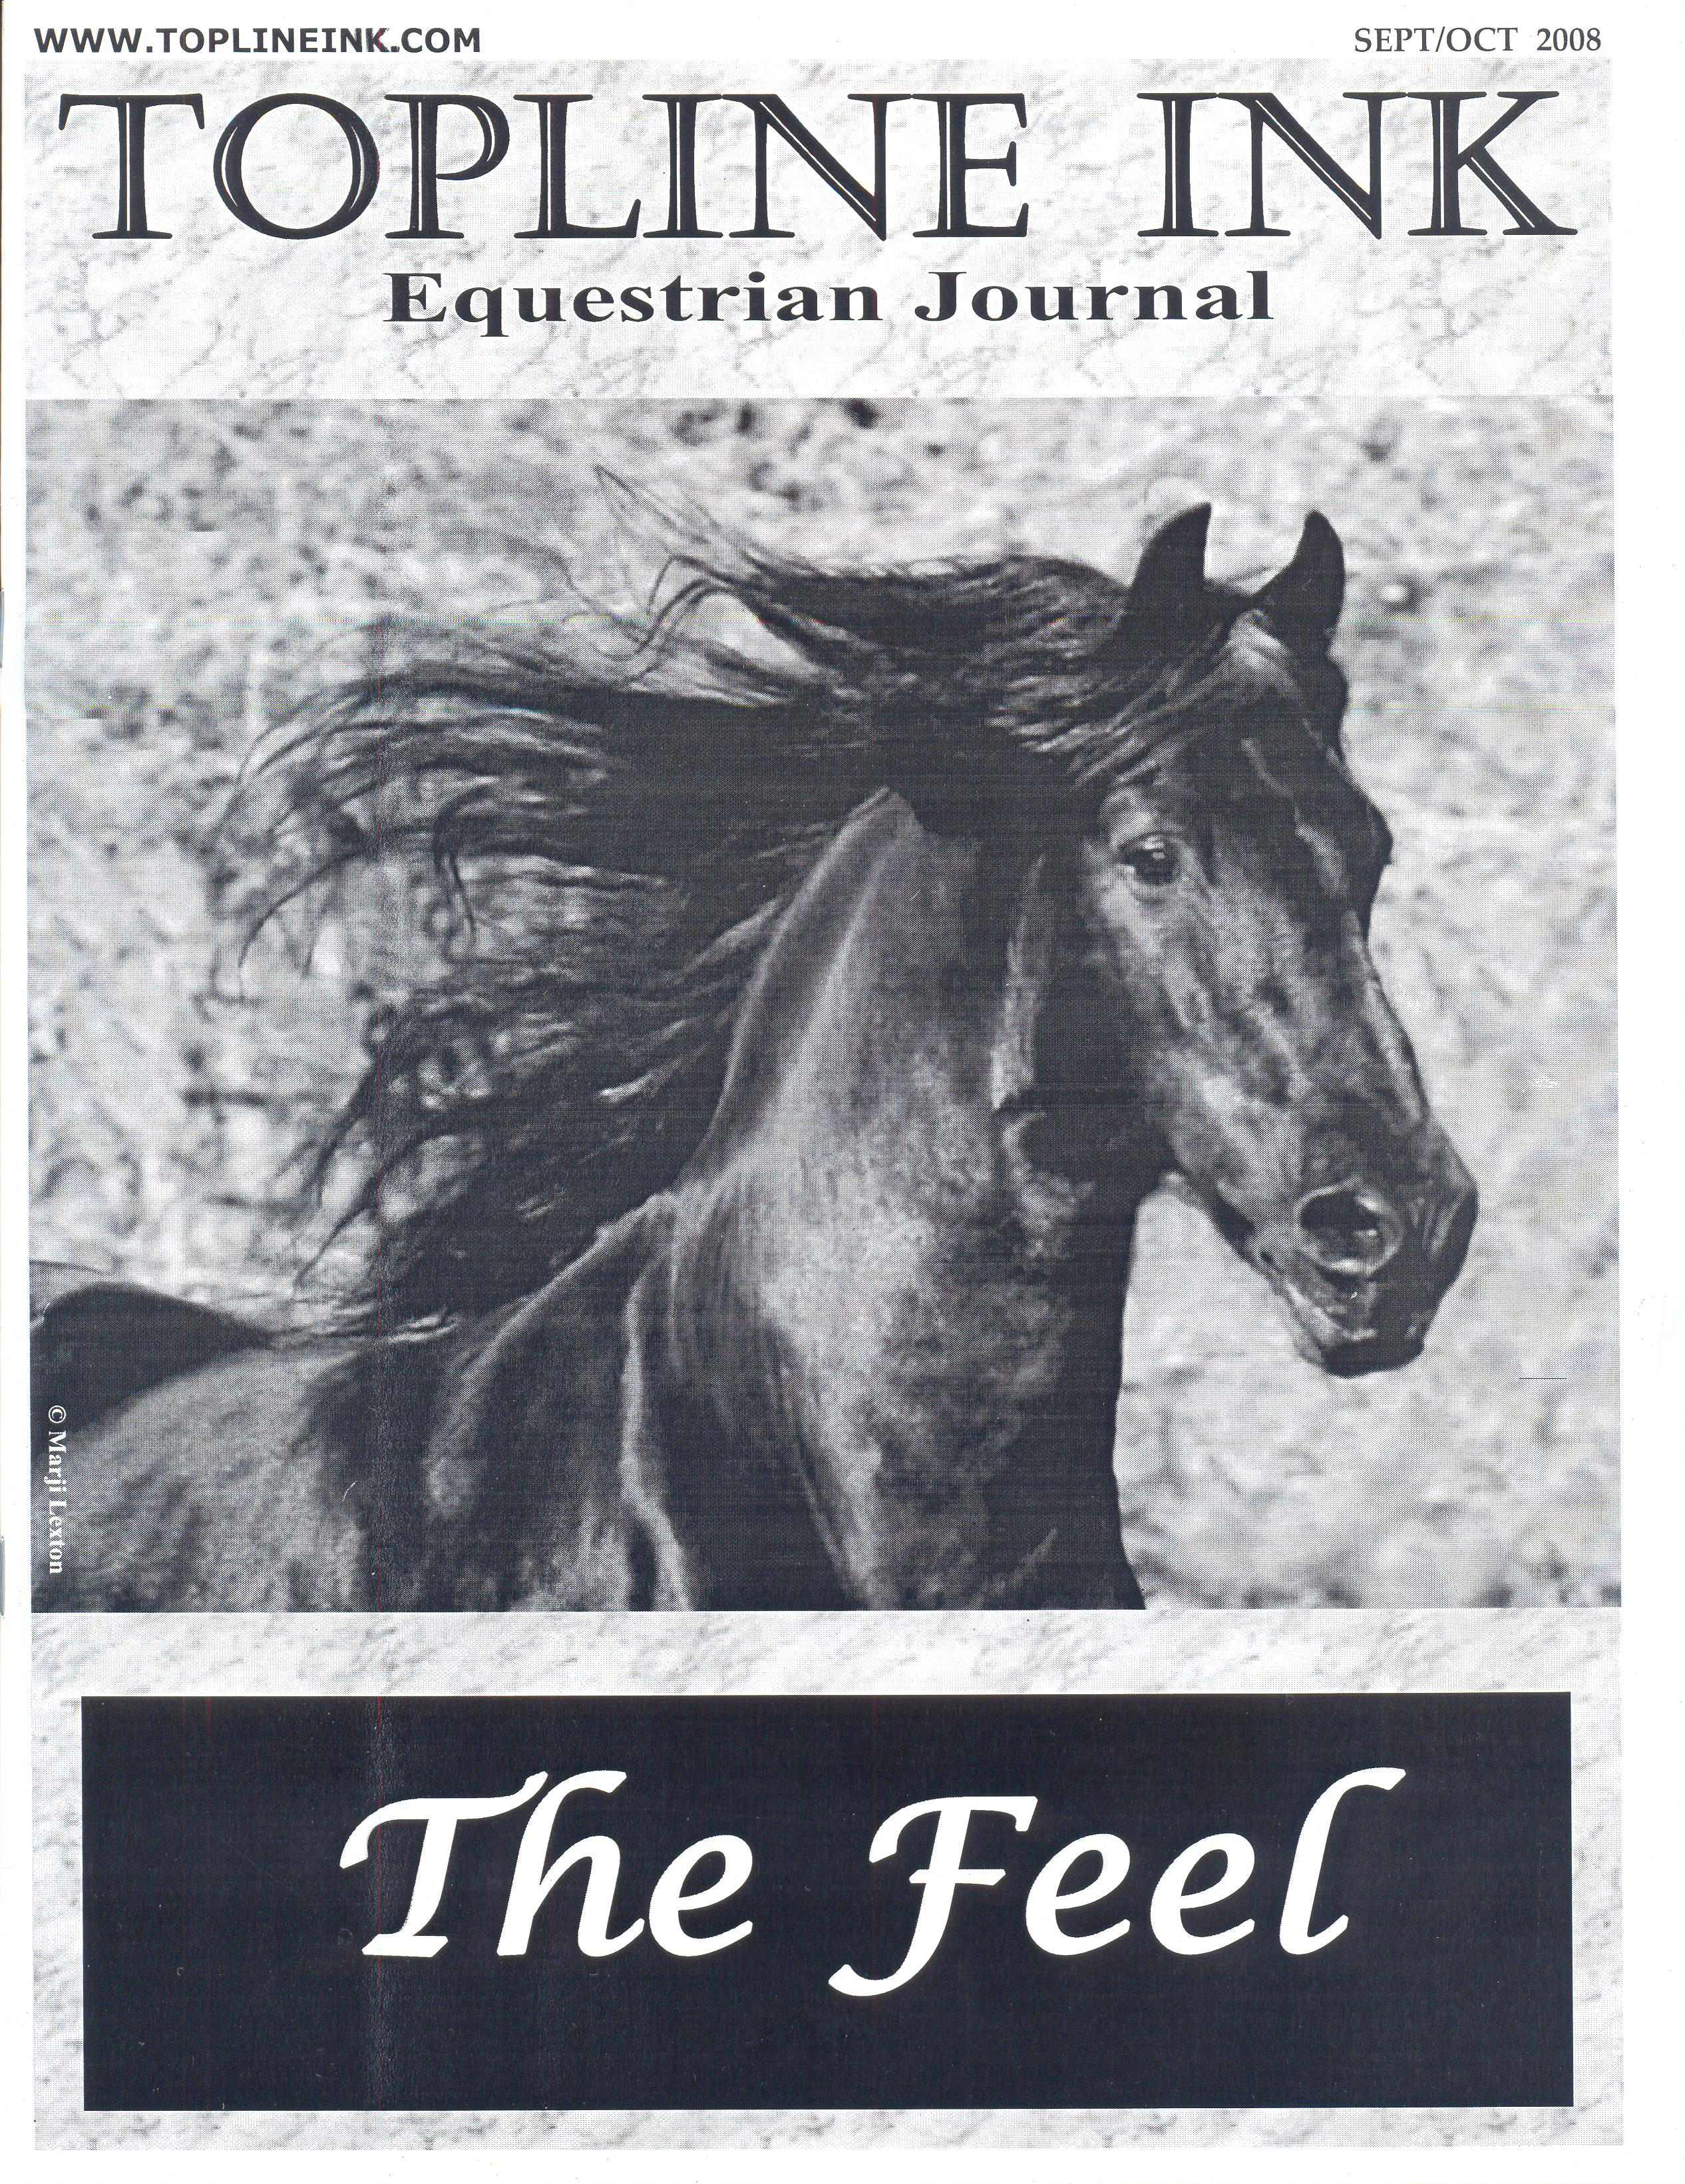 “Developing Feel” (Topline Ink Equestrian Journal, Sep/Oct 2008)